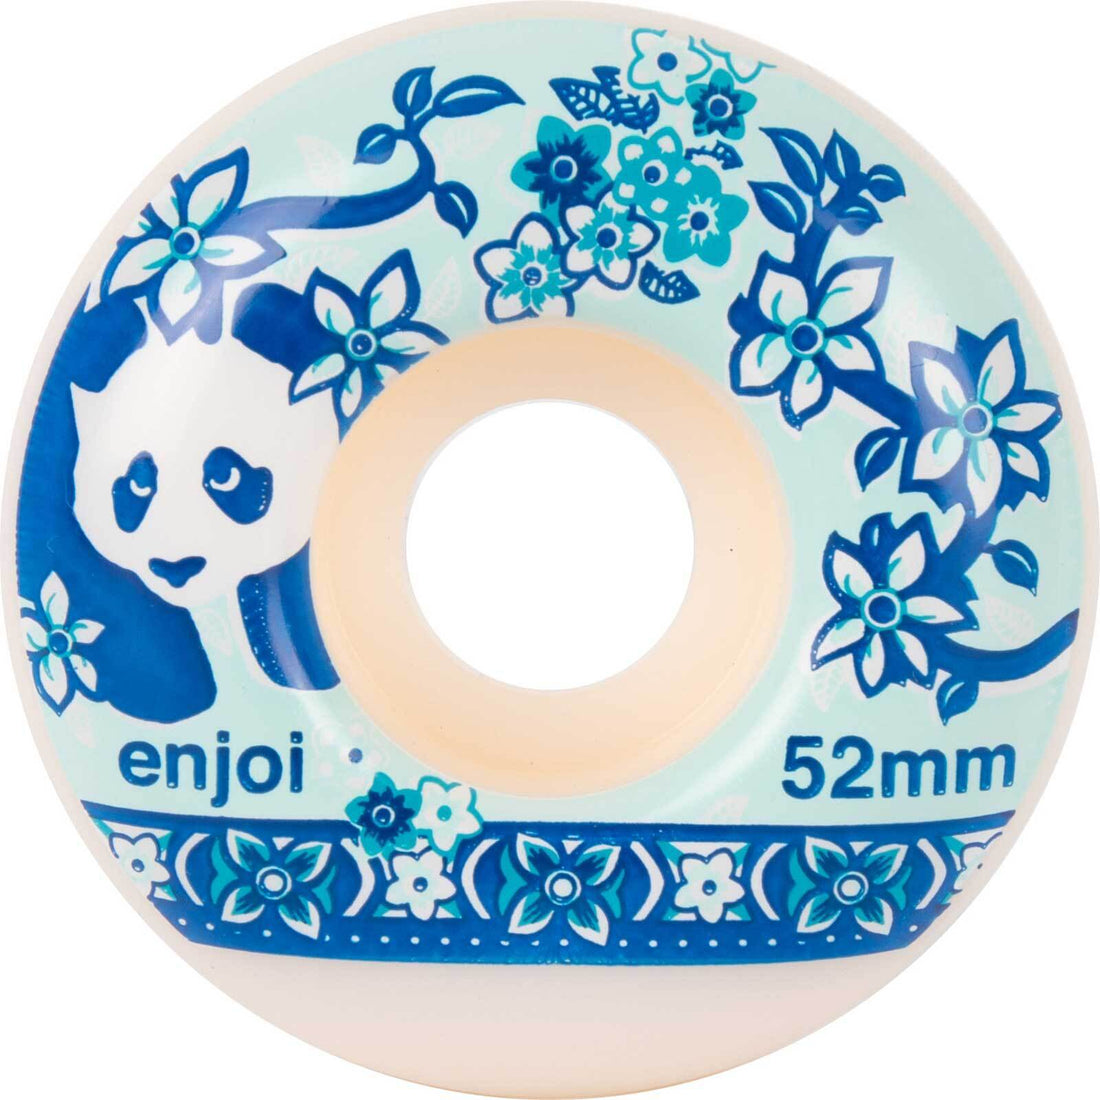 Enjoi Ming Skateboard Wheels - Light Blue 52mm